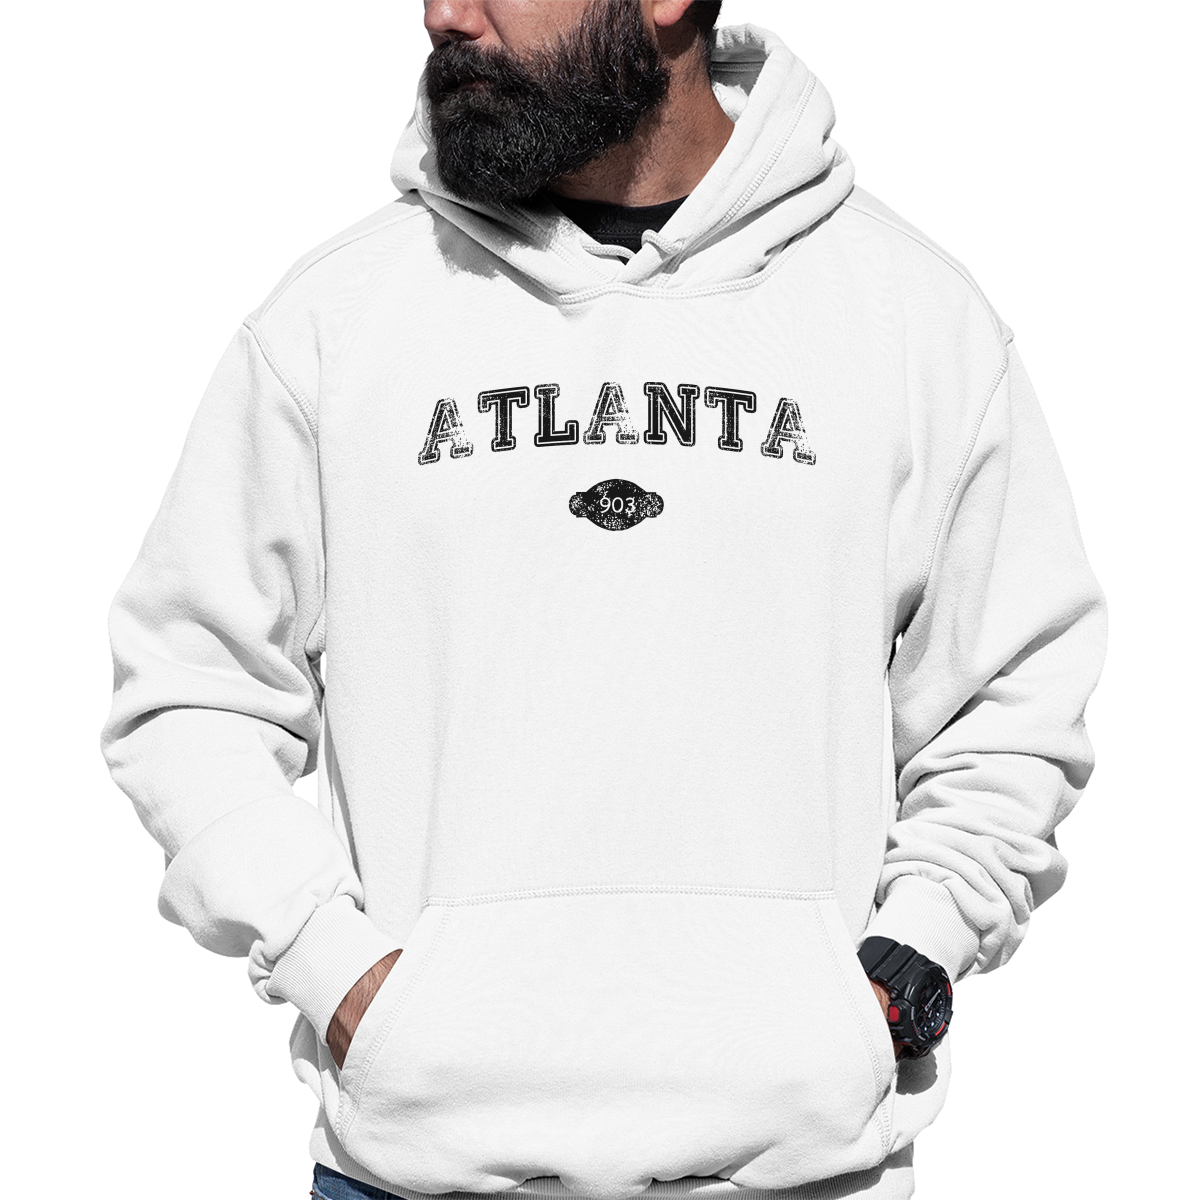 Atlanta 903 Represent Unisex Hoodie | White